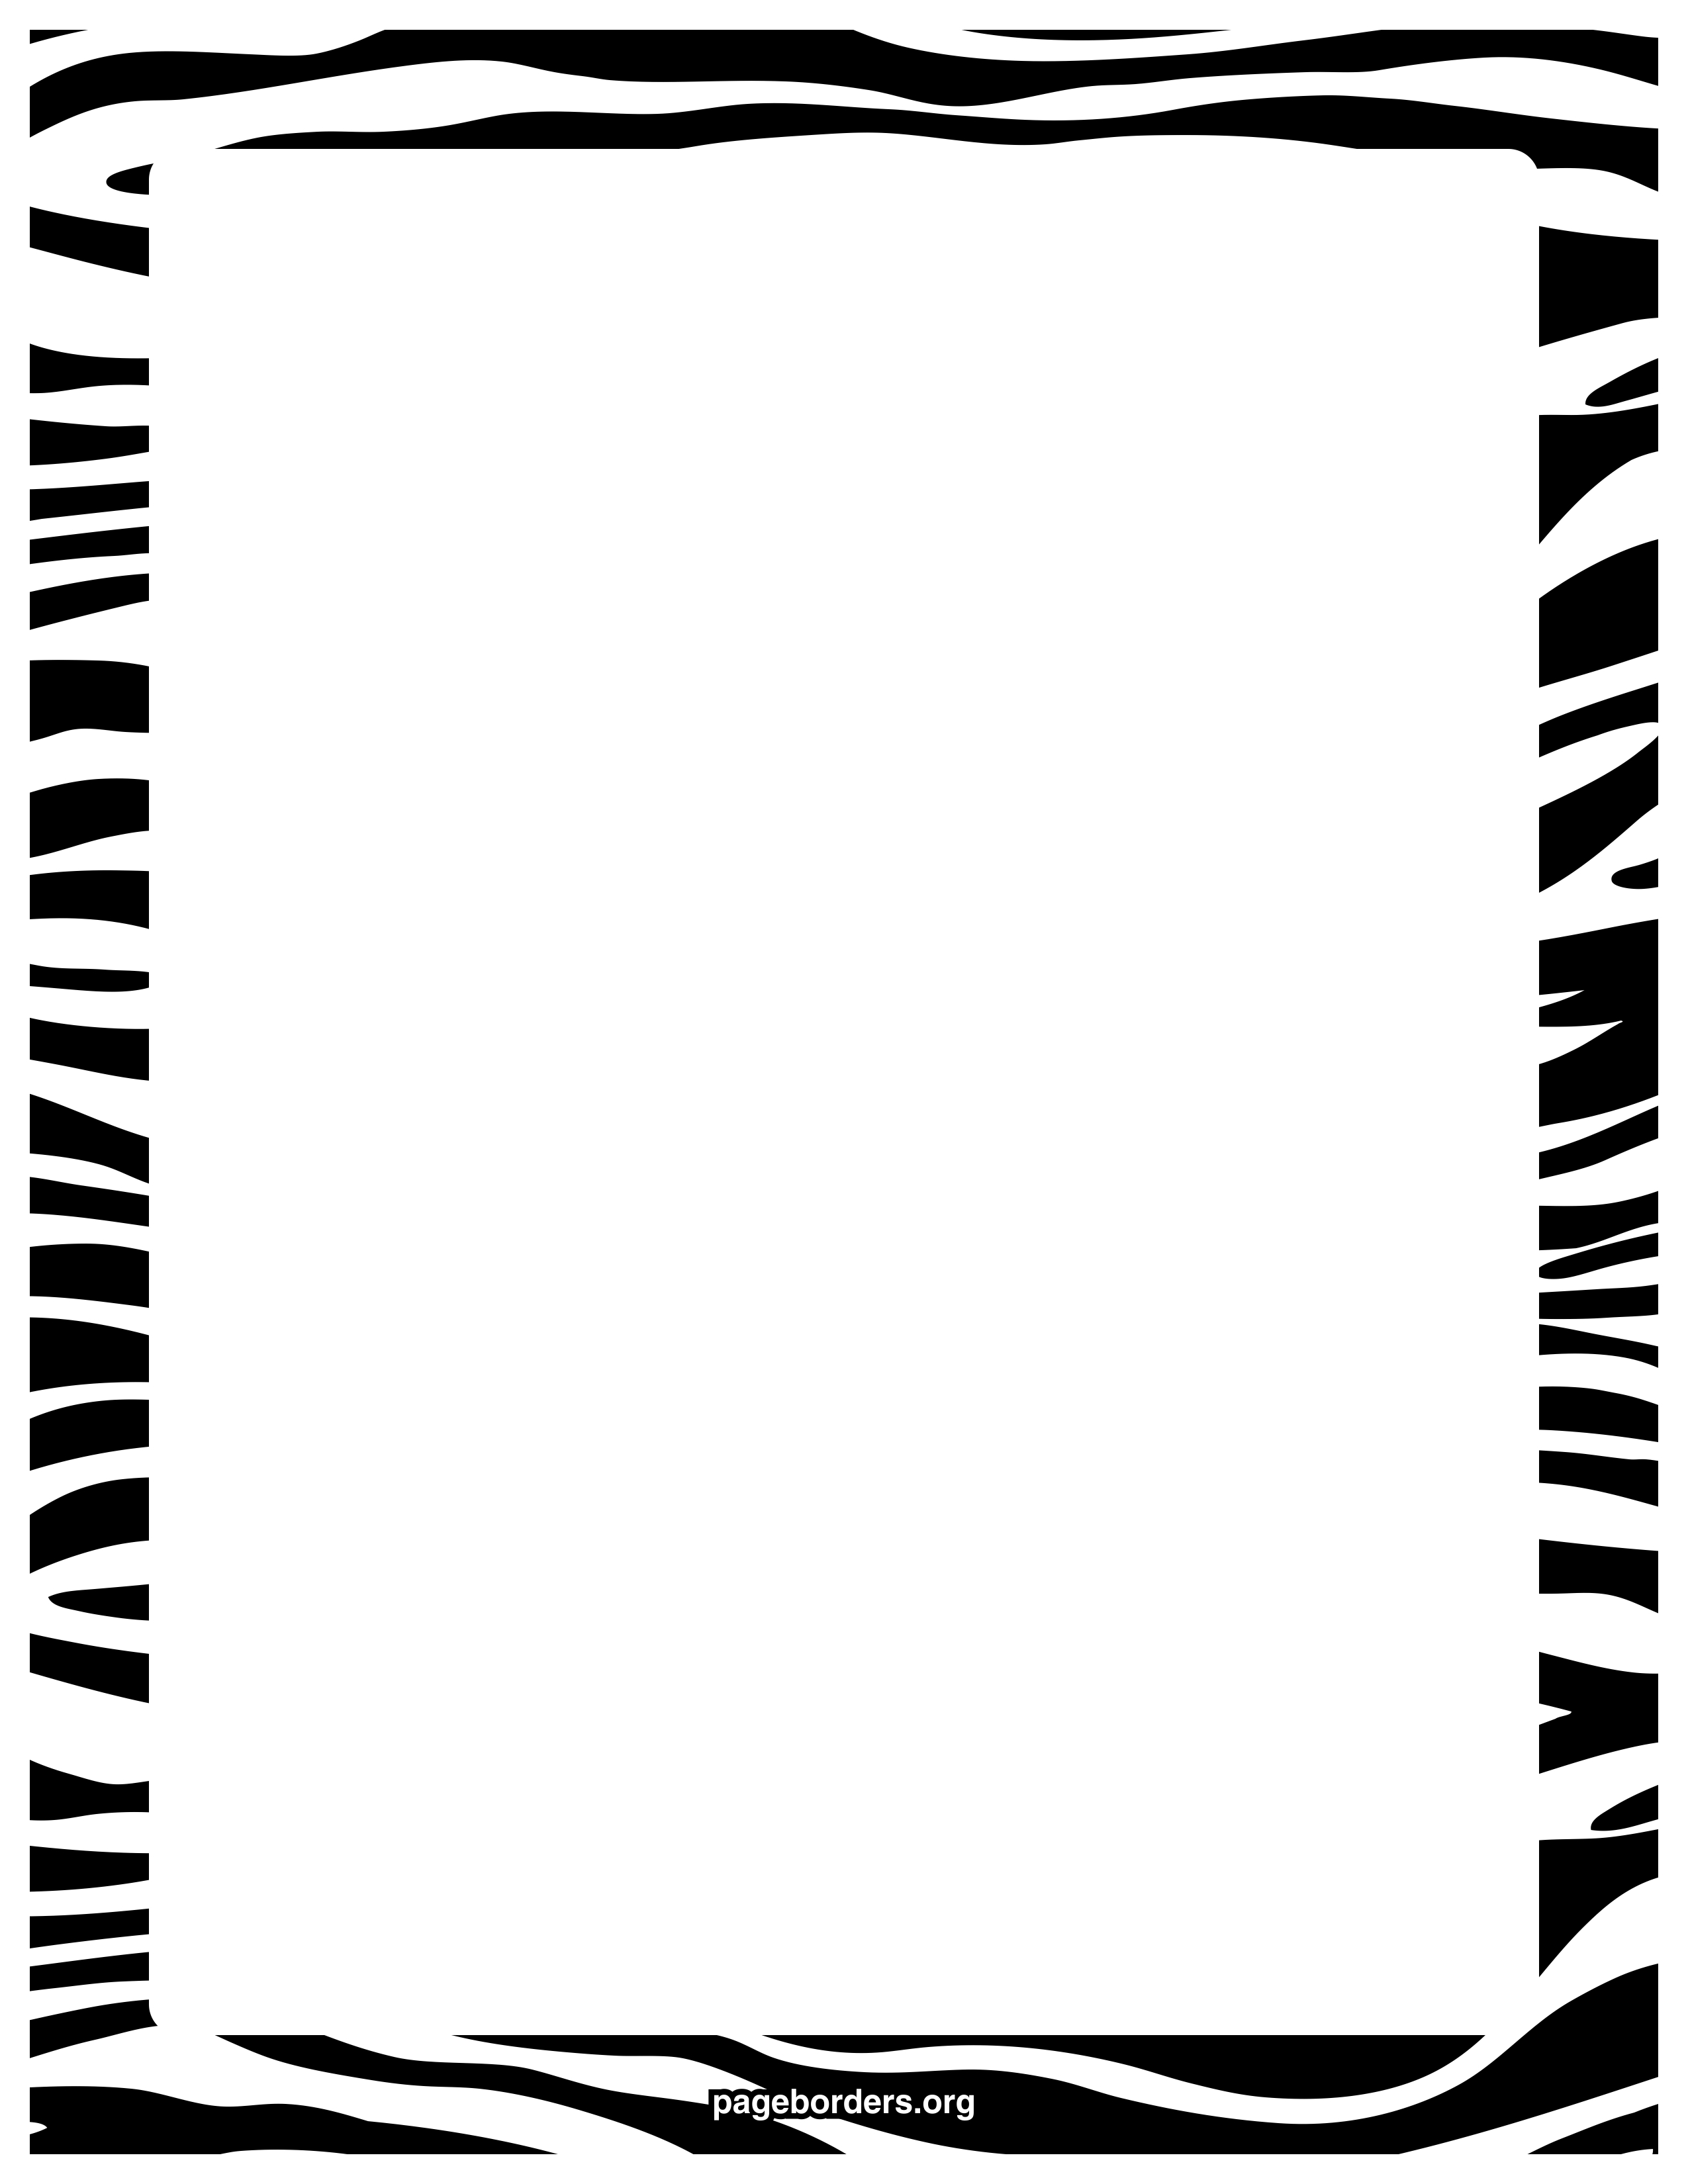 Clipart Borders Fire Border With White Background Zebra Print Border